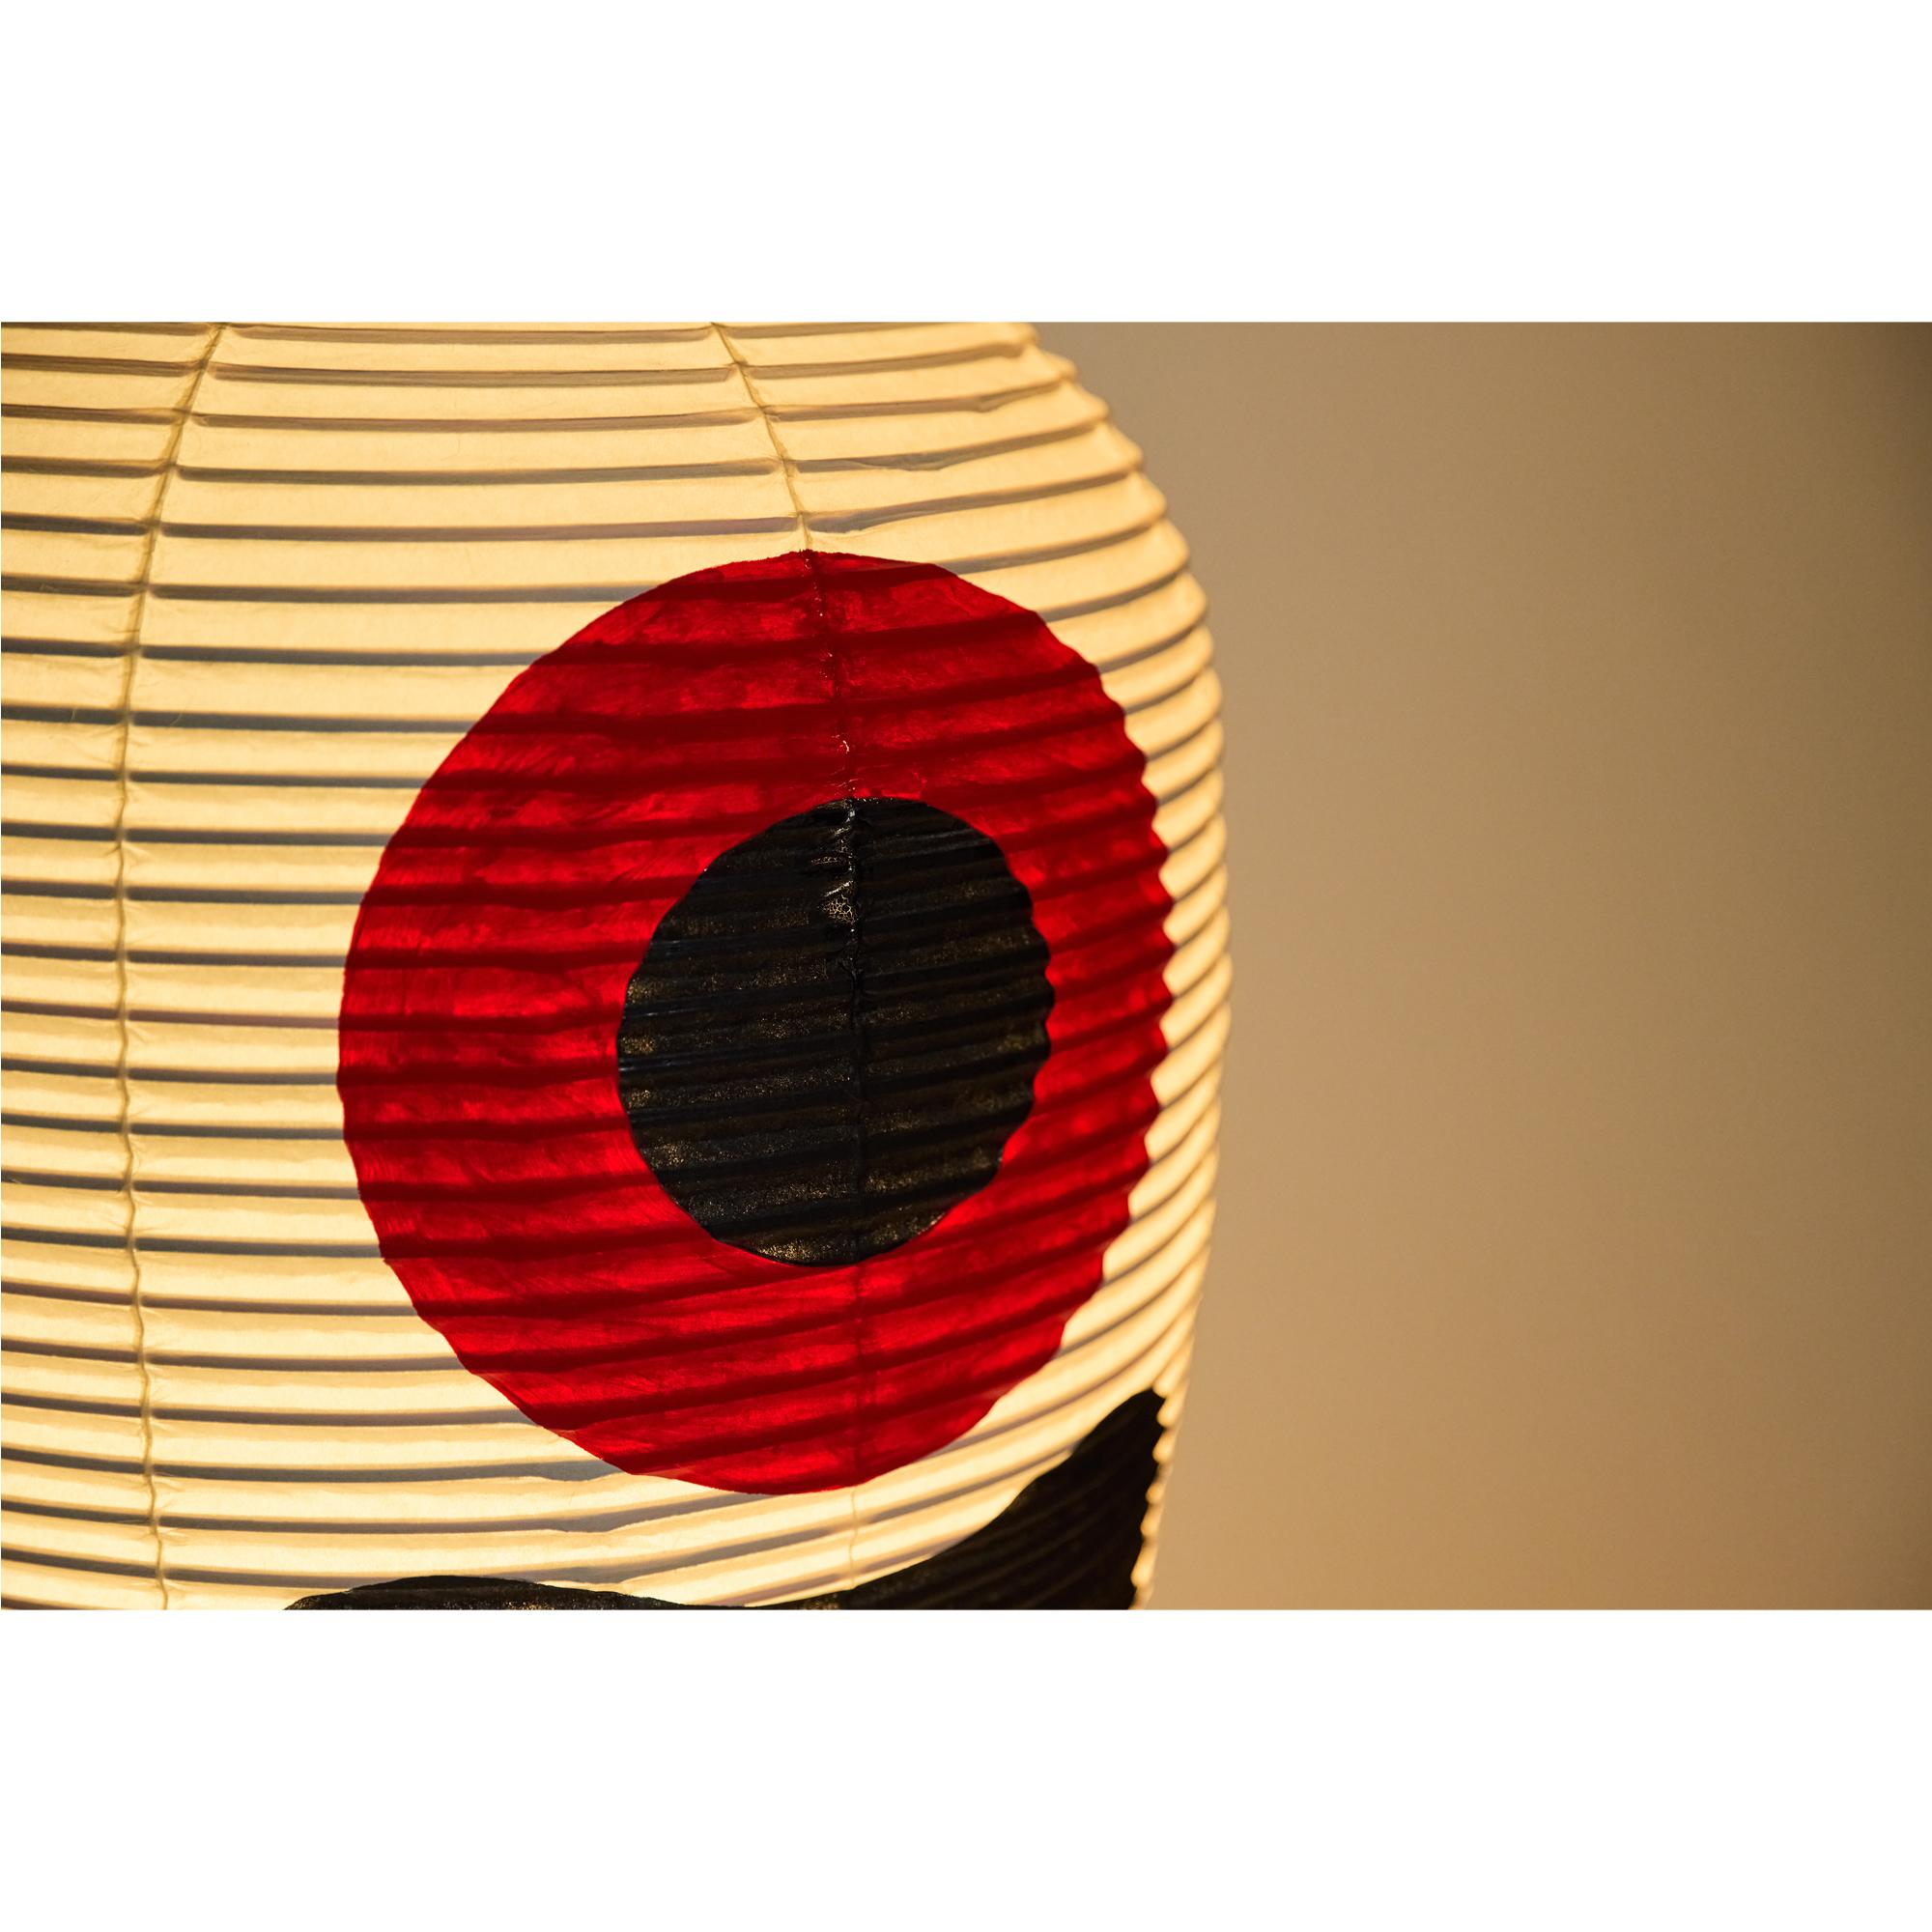 Edo Contemporary Japanese Chochin Floor Lamp Limited Edition #1 Zen Washi For Sale